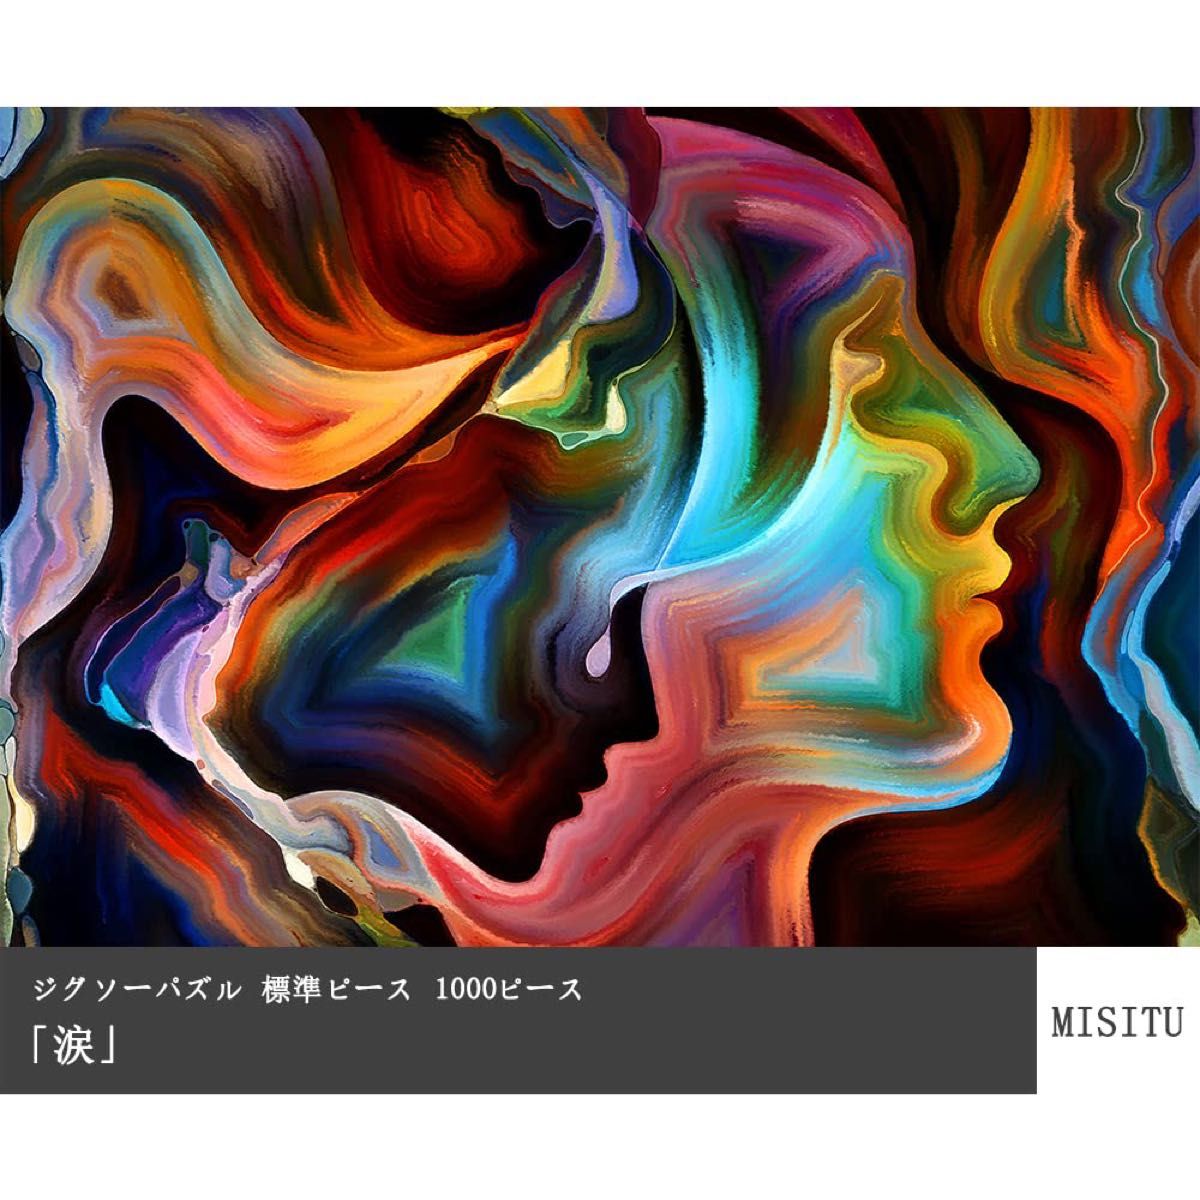 MISITU ジグソーパズル 1000ピース パズル 絵画 アート 50×70